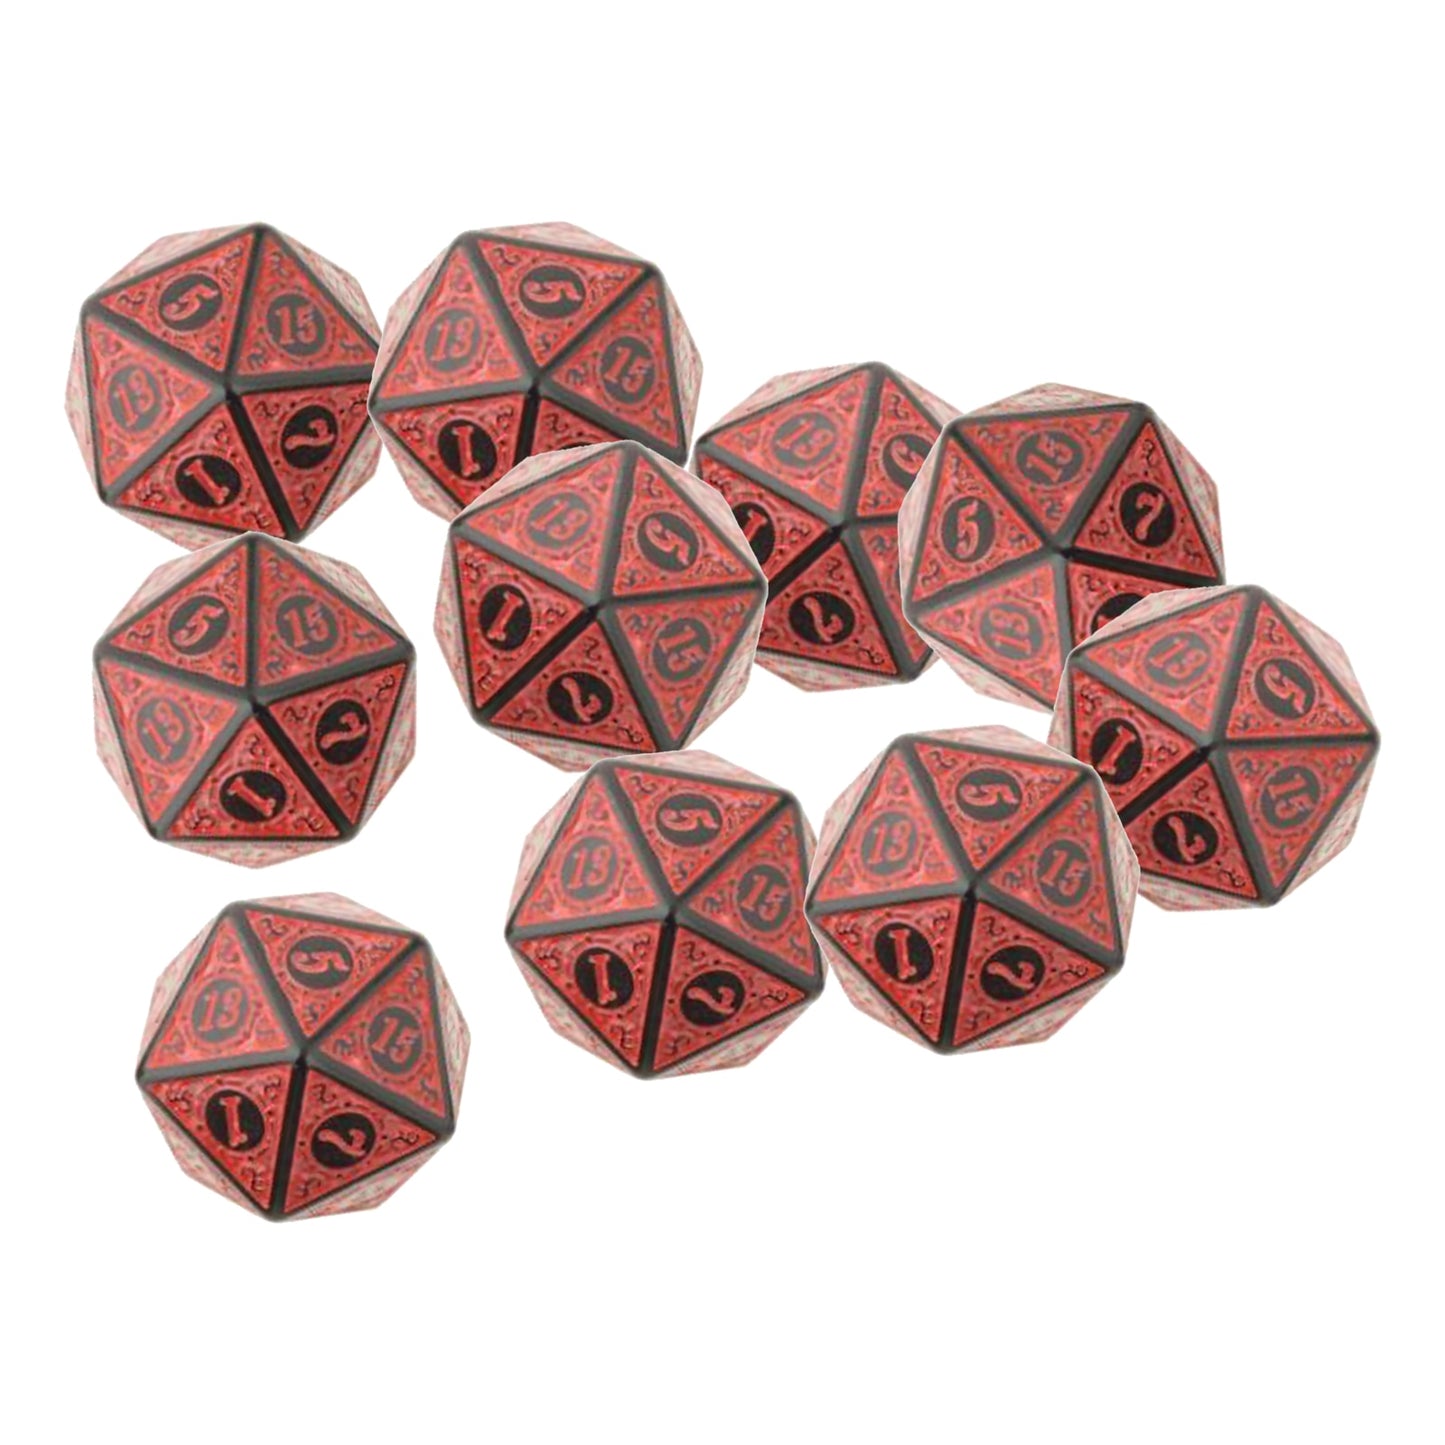 10 piece polyhedrol dice set